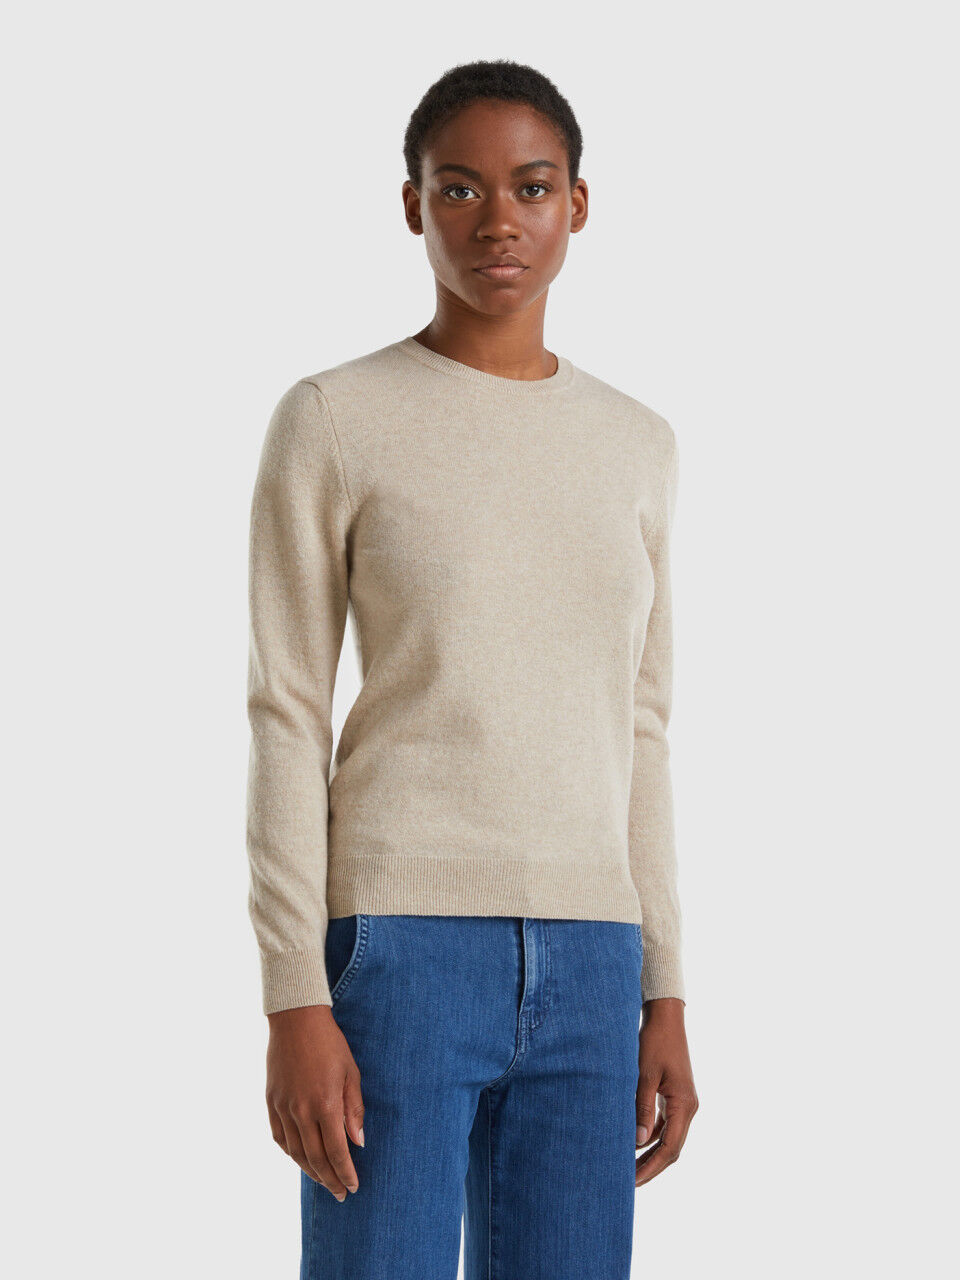 Beige crew neck sweater in pure Merino wool customizable